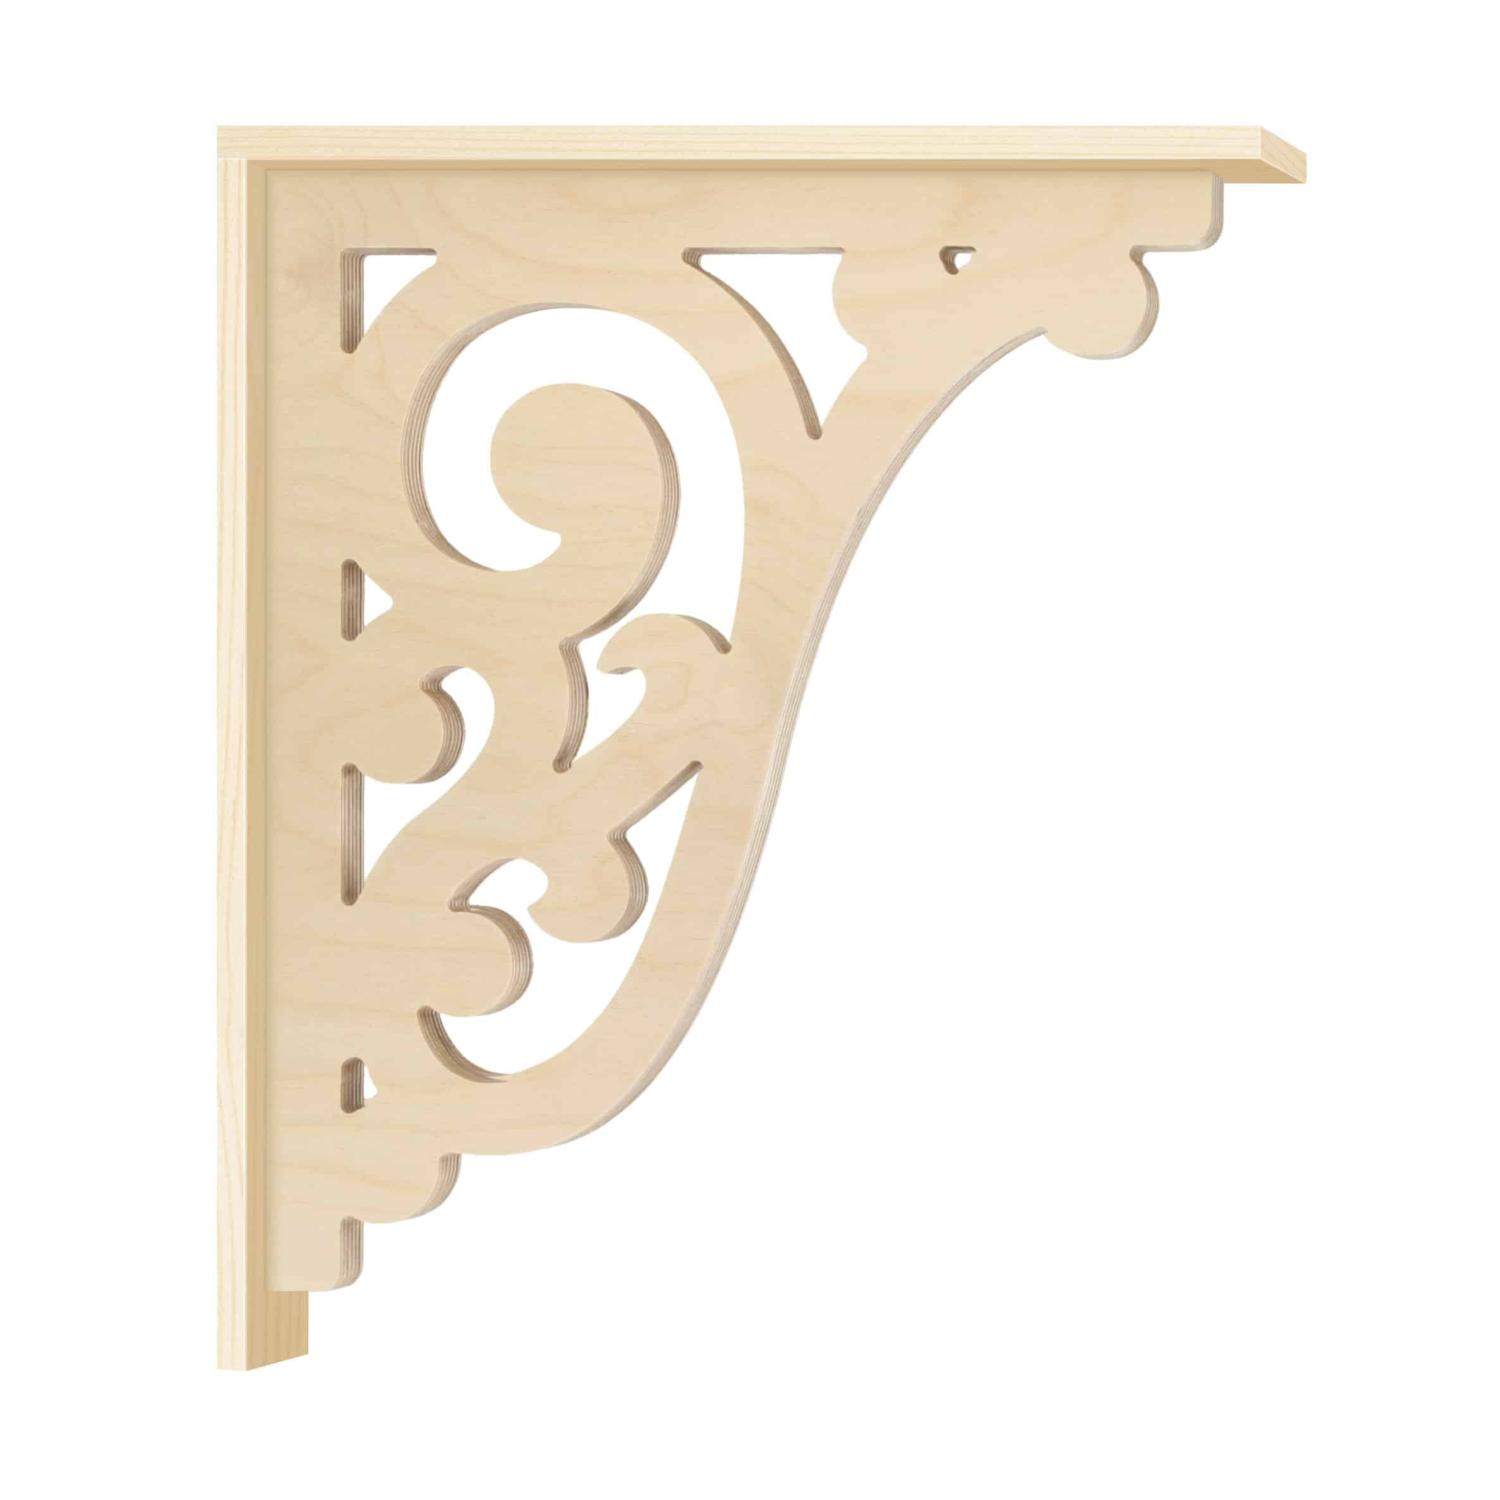 Bracket 013 – Victorian corbel for porch and veranda with decorative wooden strip